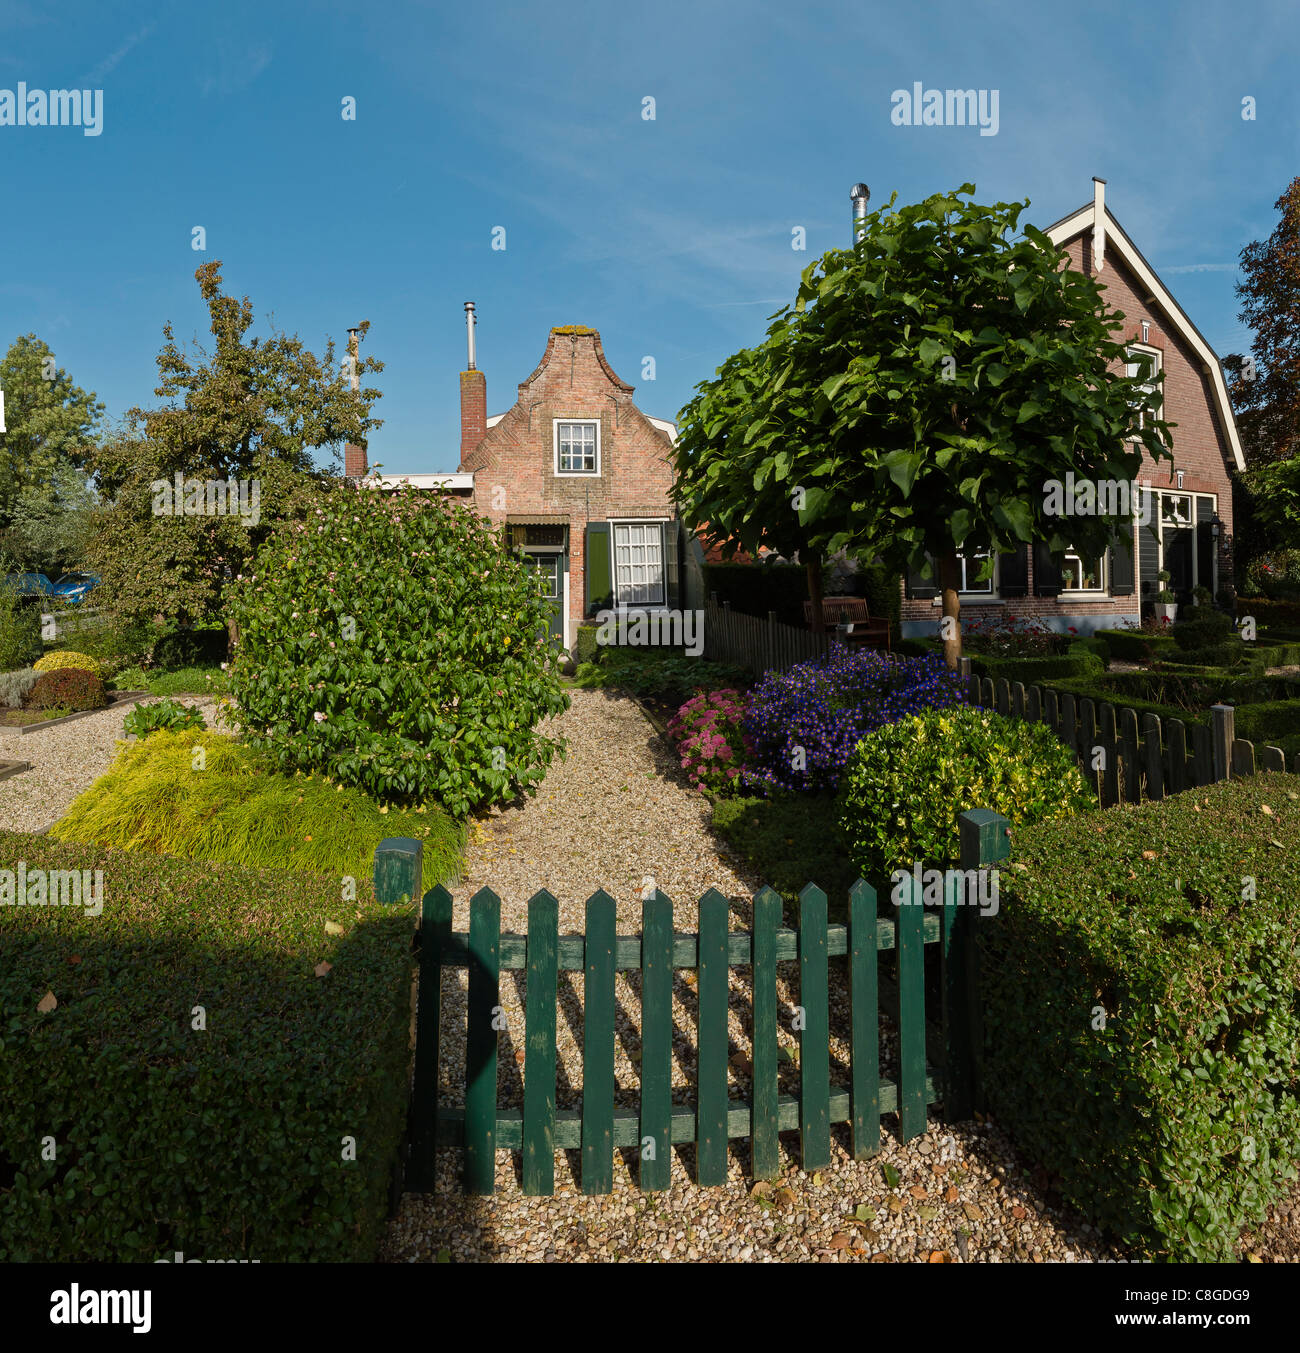 Netherlands, Europe, Holland, Noordeloos, House, front garden, city, village, forest, wood, trees, summer, garden, Stock Photo